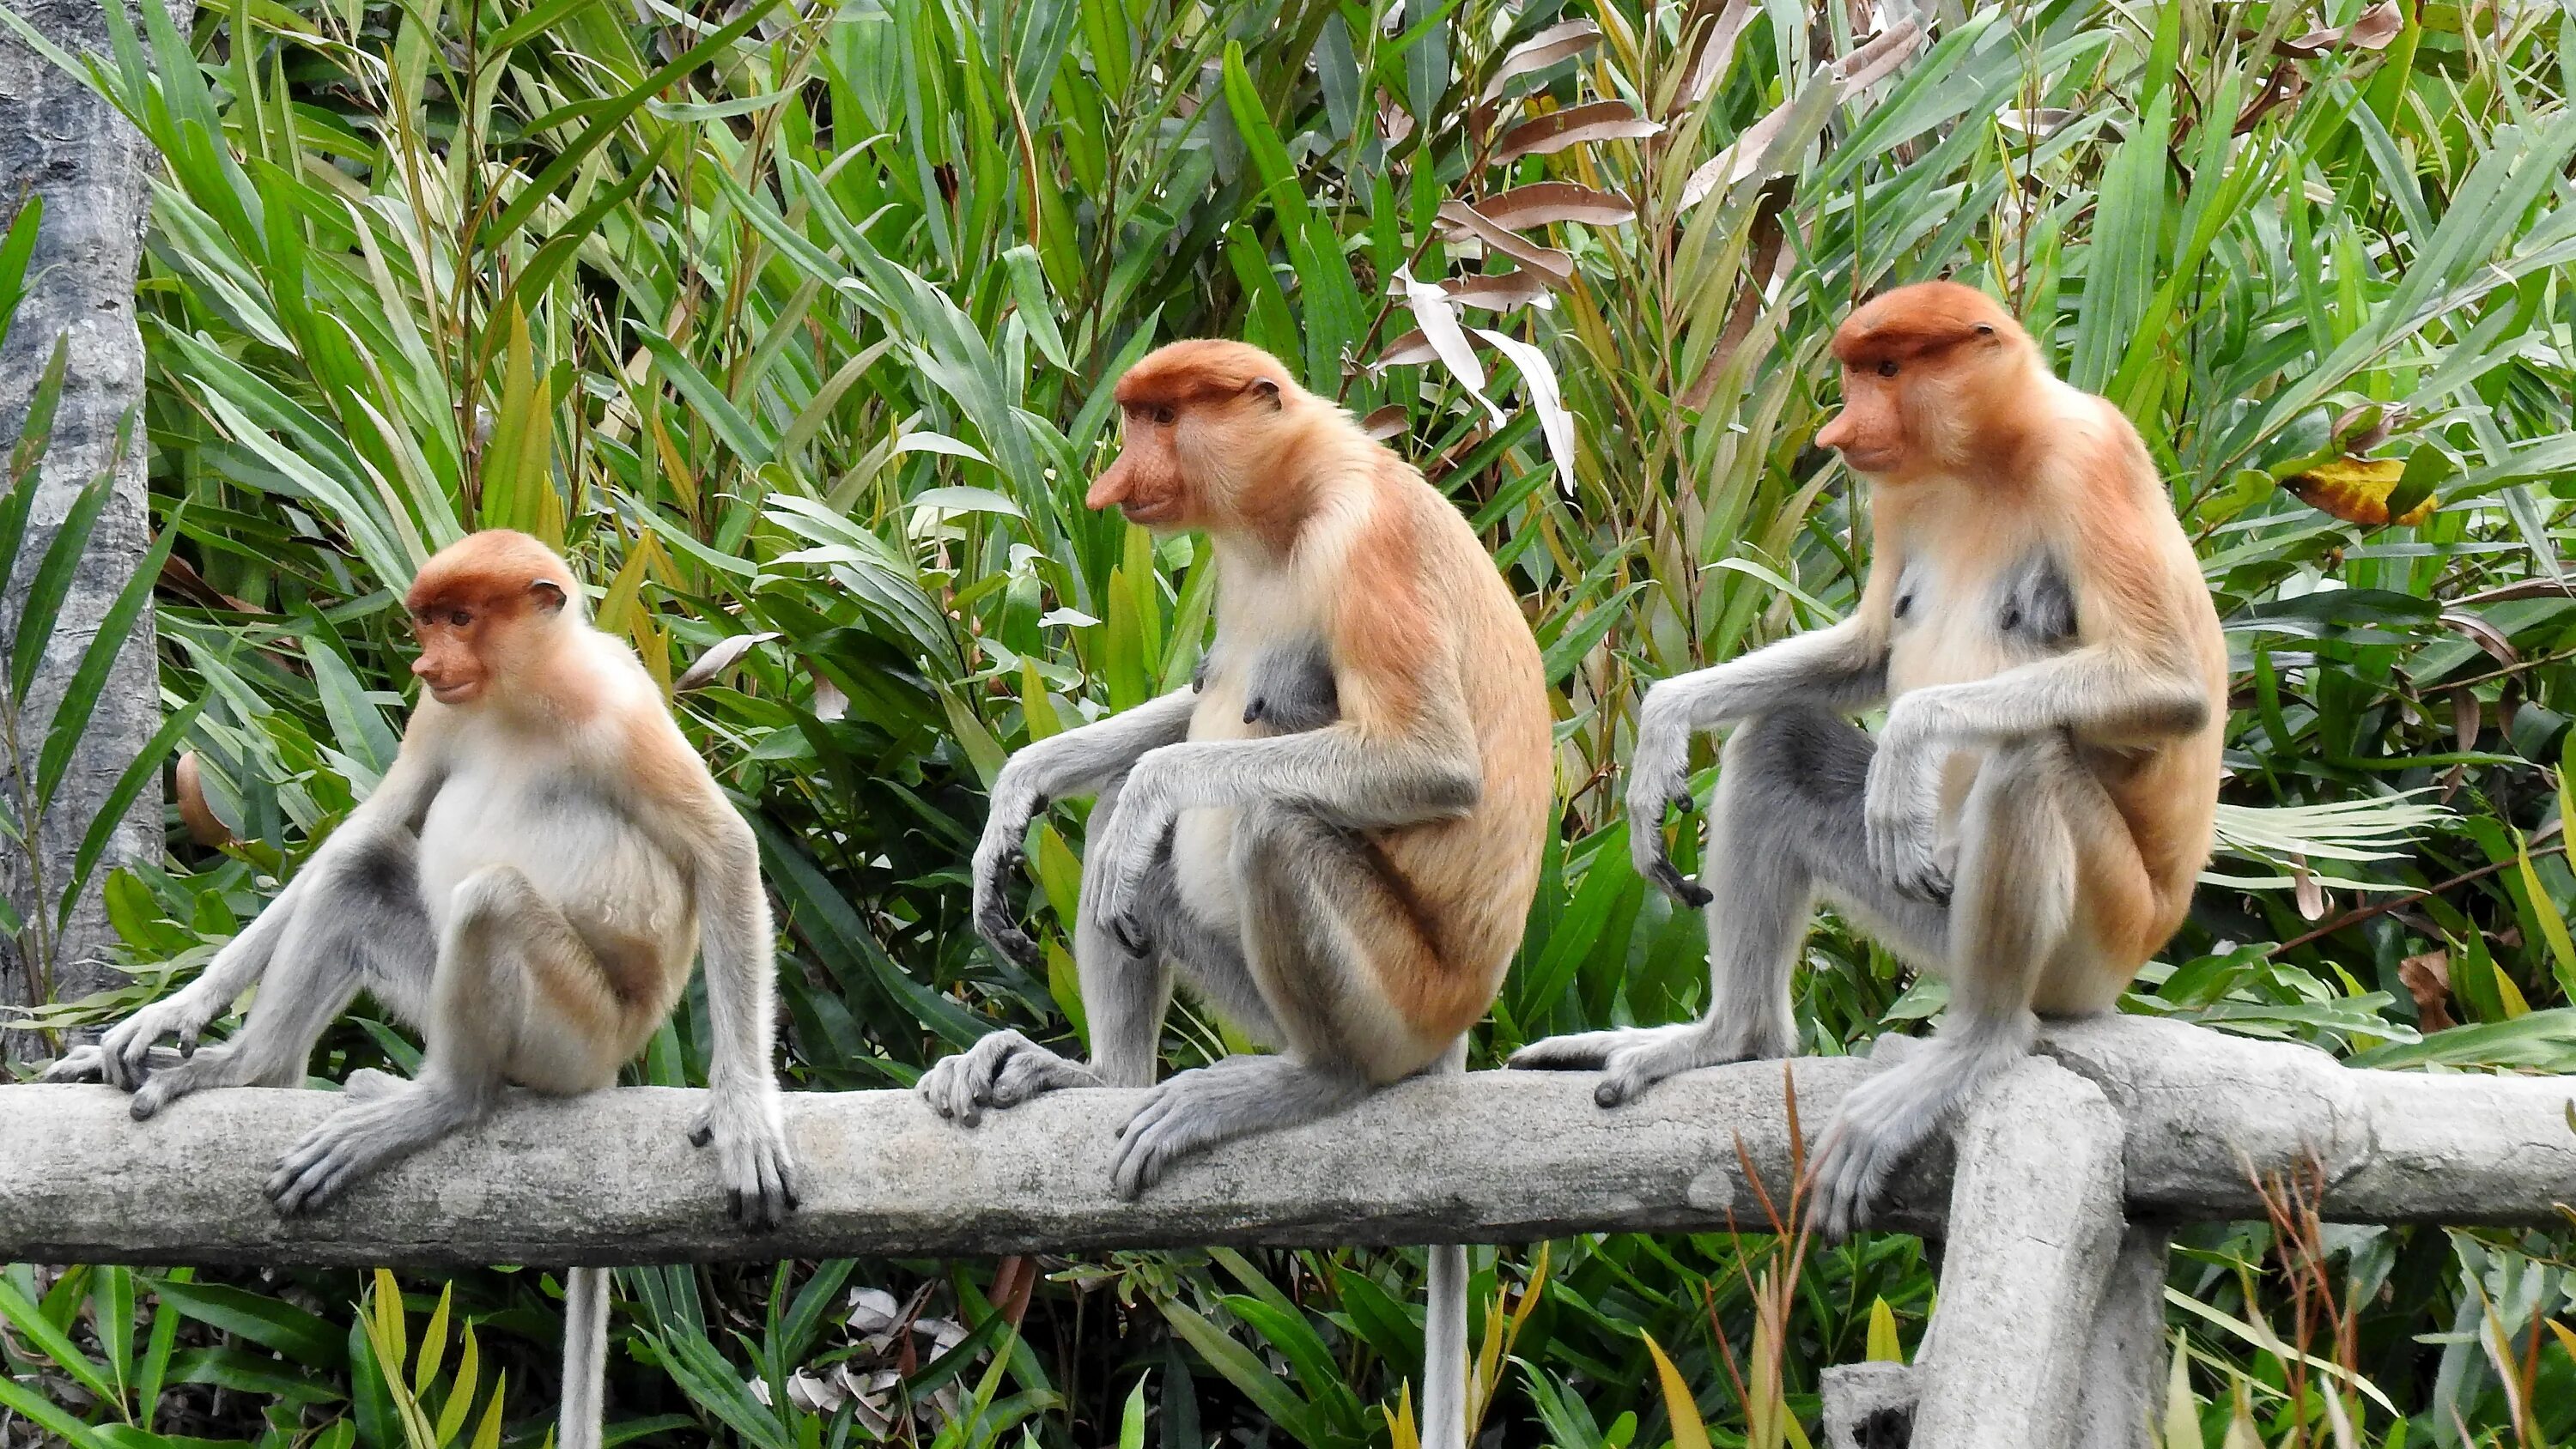 Jungle monkeys. Обезьяна носач с острова Борнео. Обезьяна носач. Носач Борнео. Борнео, Сепилок, кахау.